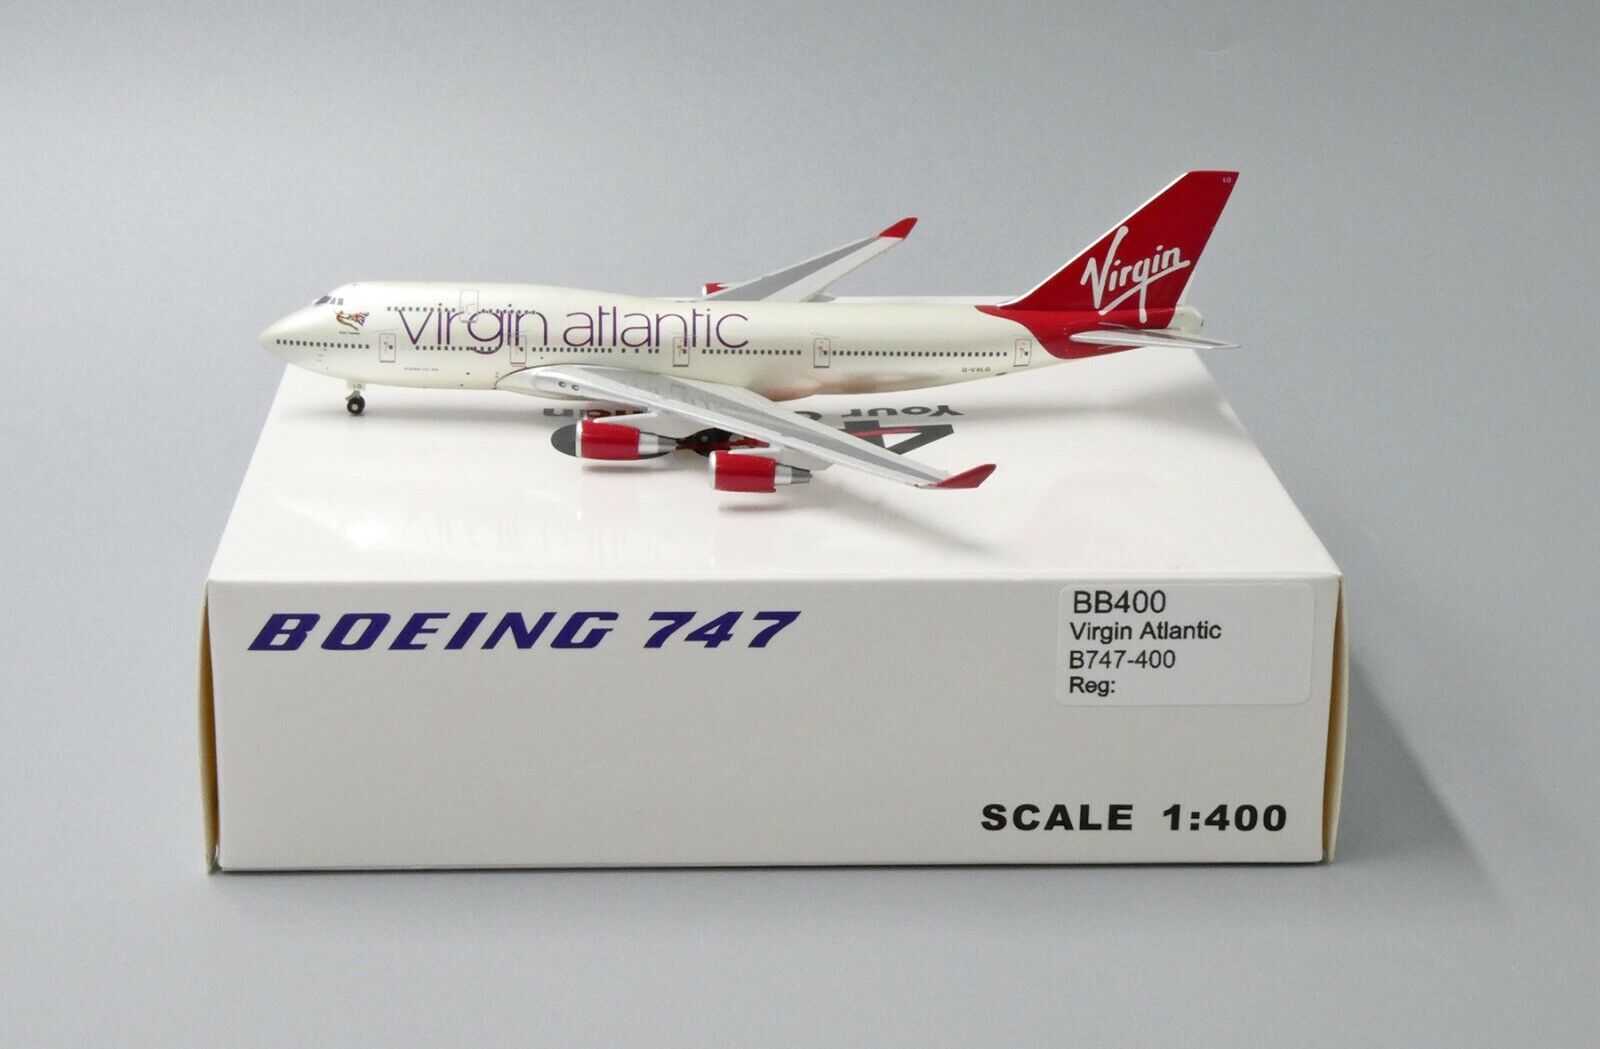 Virgin Atlantic B747-400 Reg: G-VXLG Scale 1:400  BigBird  Diecast  Model 